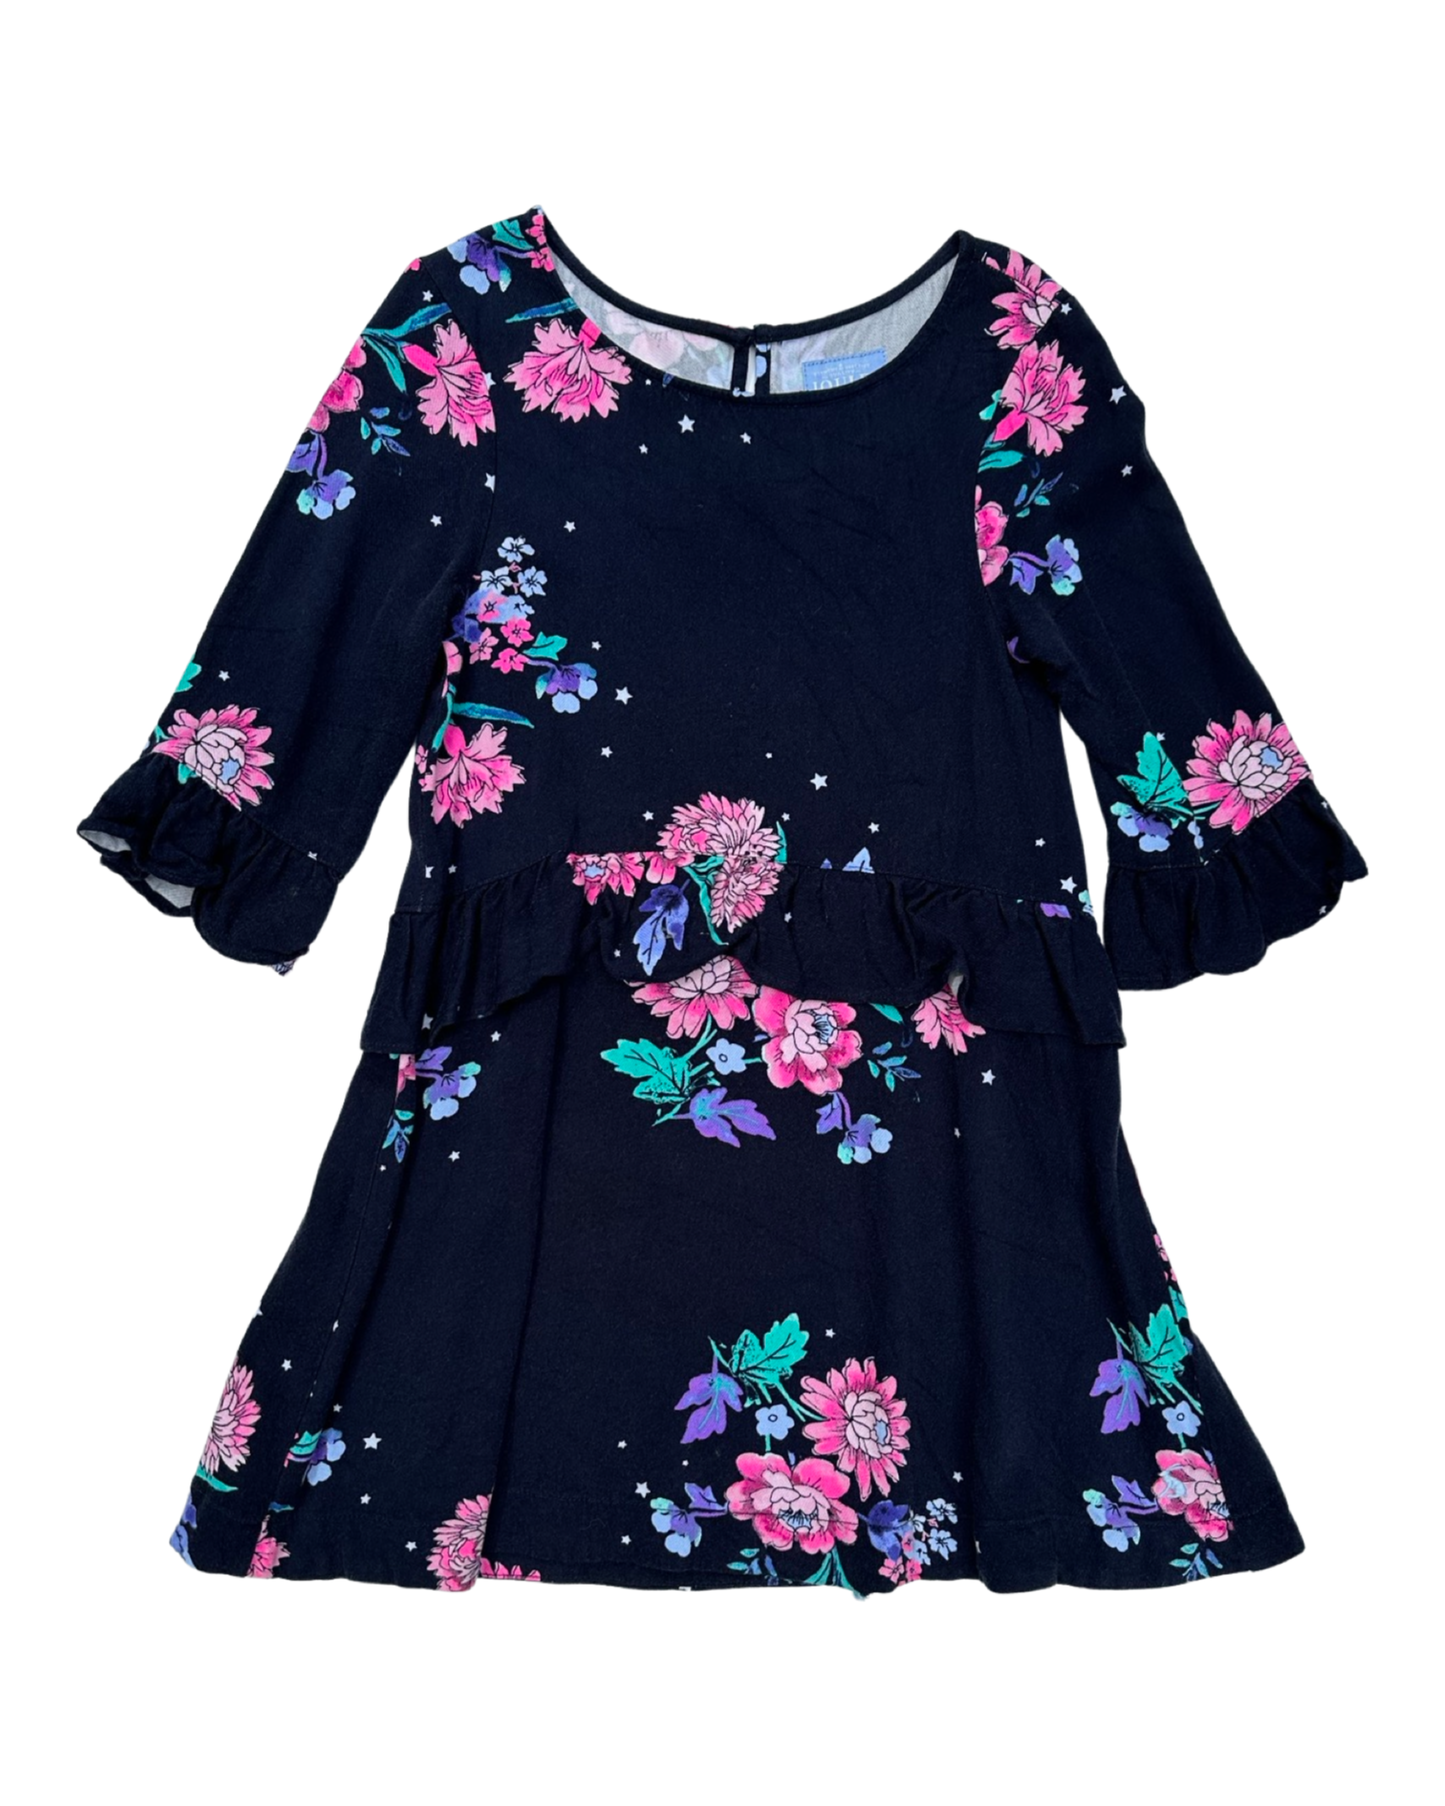 Joules floral print dress (size 4-5yrs)